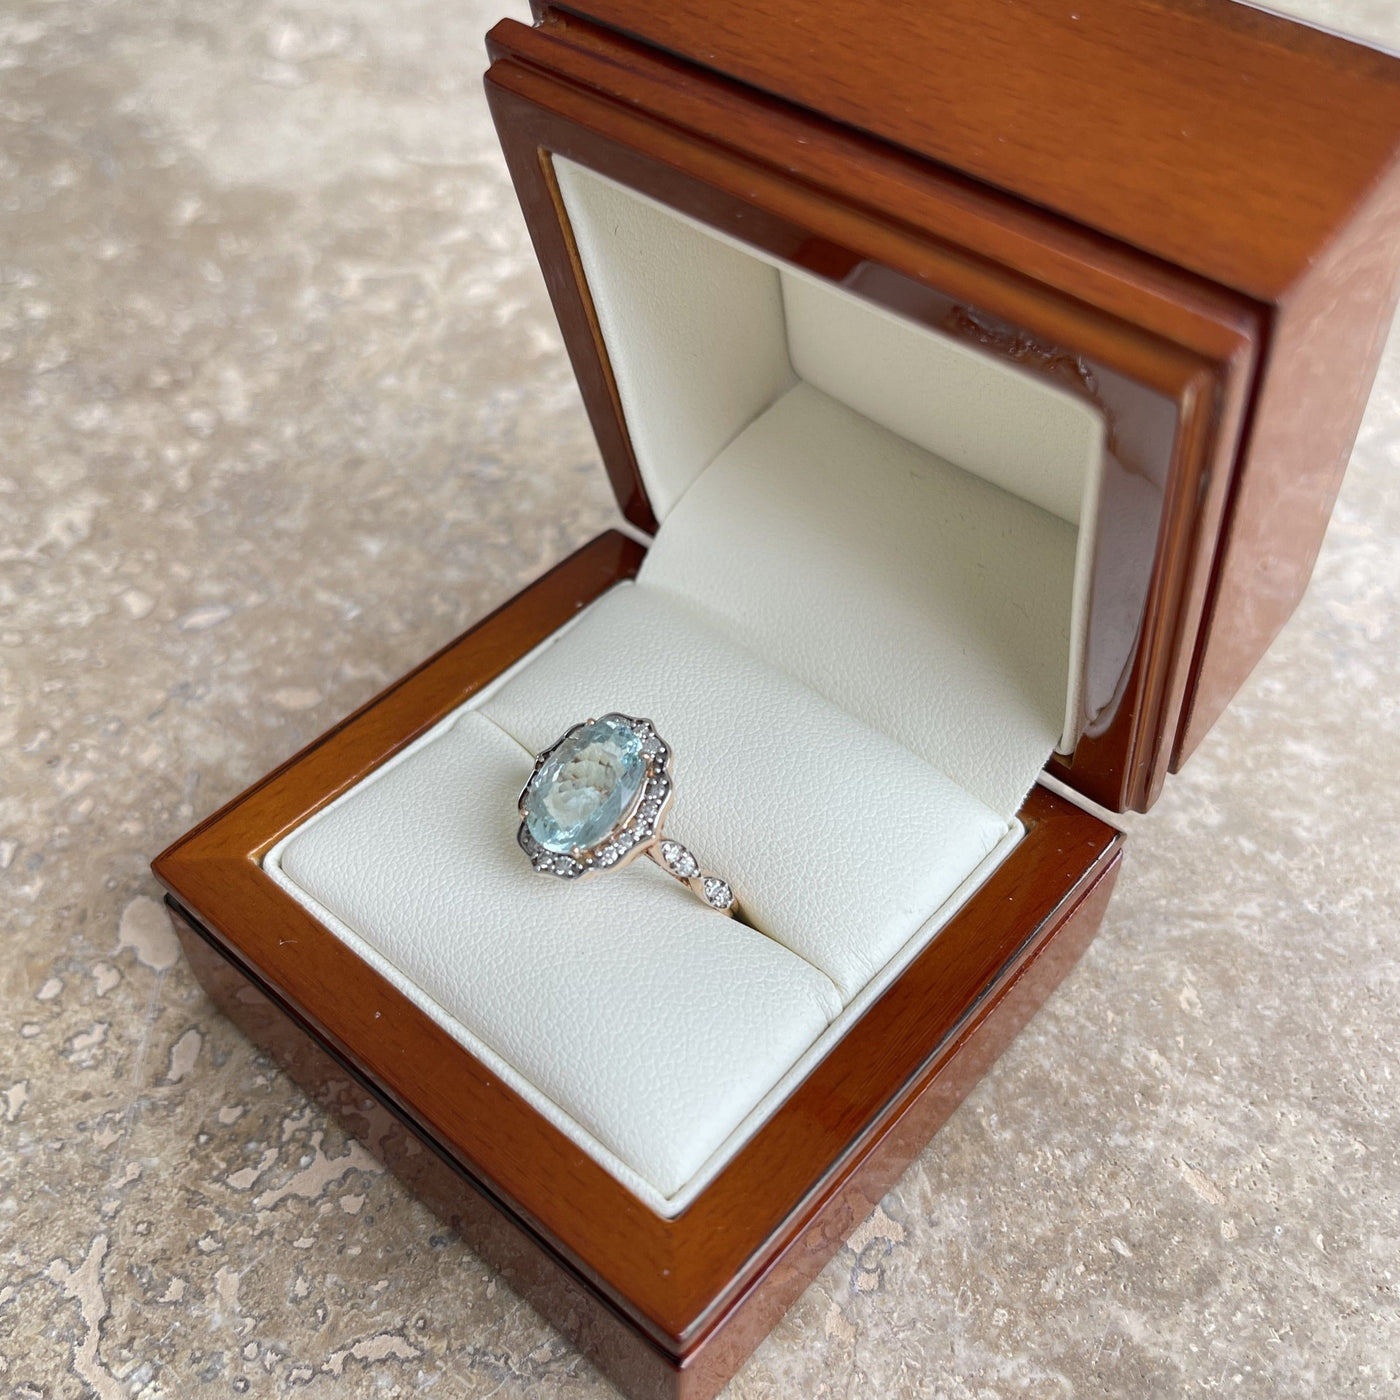 18CT Rose Gold Aquamarine and Diamond Ring